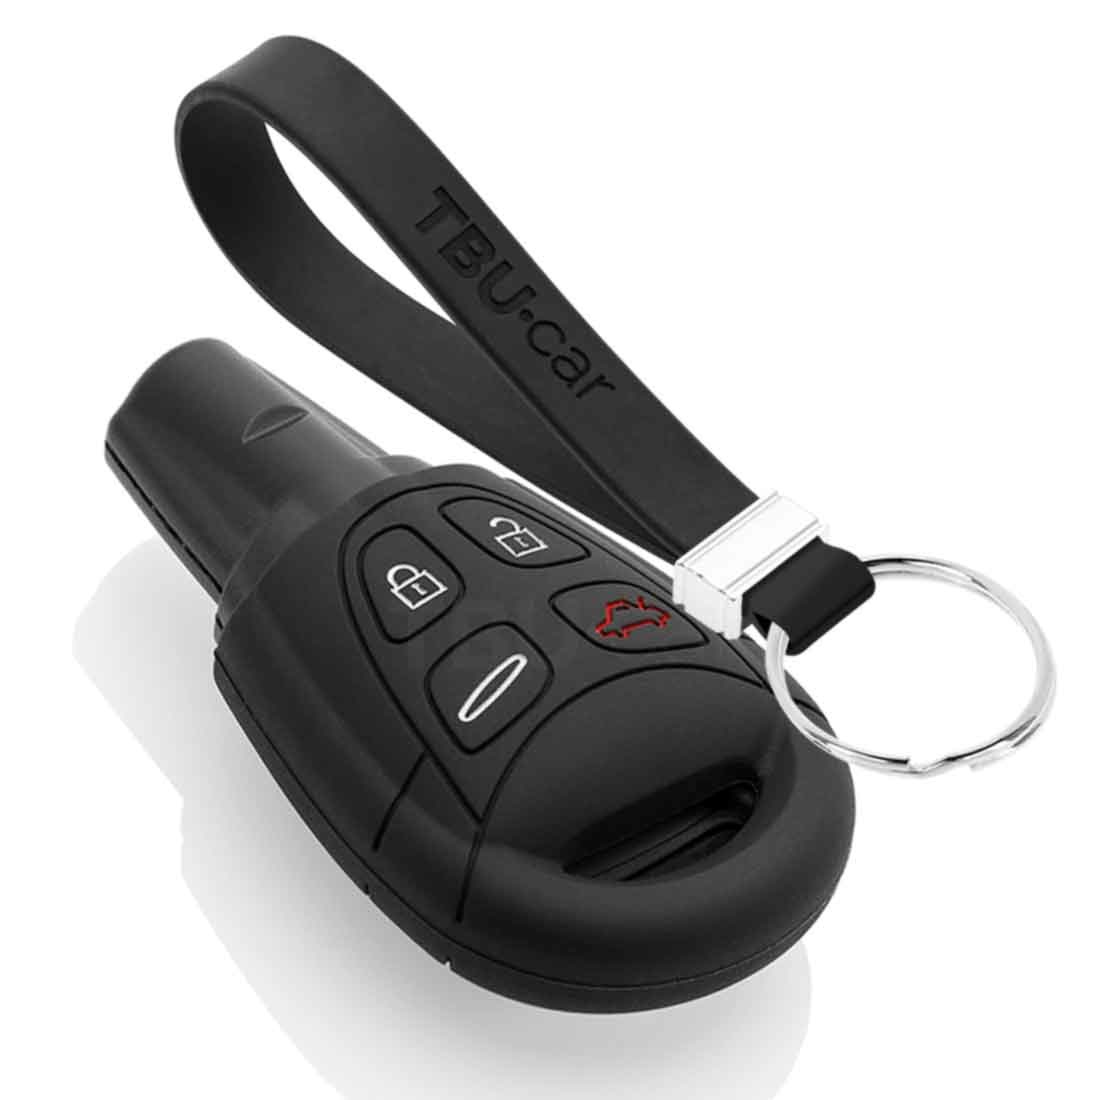 TBU car TBU car Autoschlüssel Hülle kompatibel mit Saab 4 Tasten - Schutzhülle aus Silikon - Auto Schlüsselhülle Cover in Schwarz